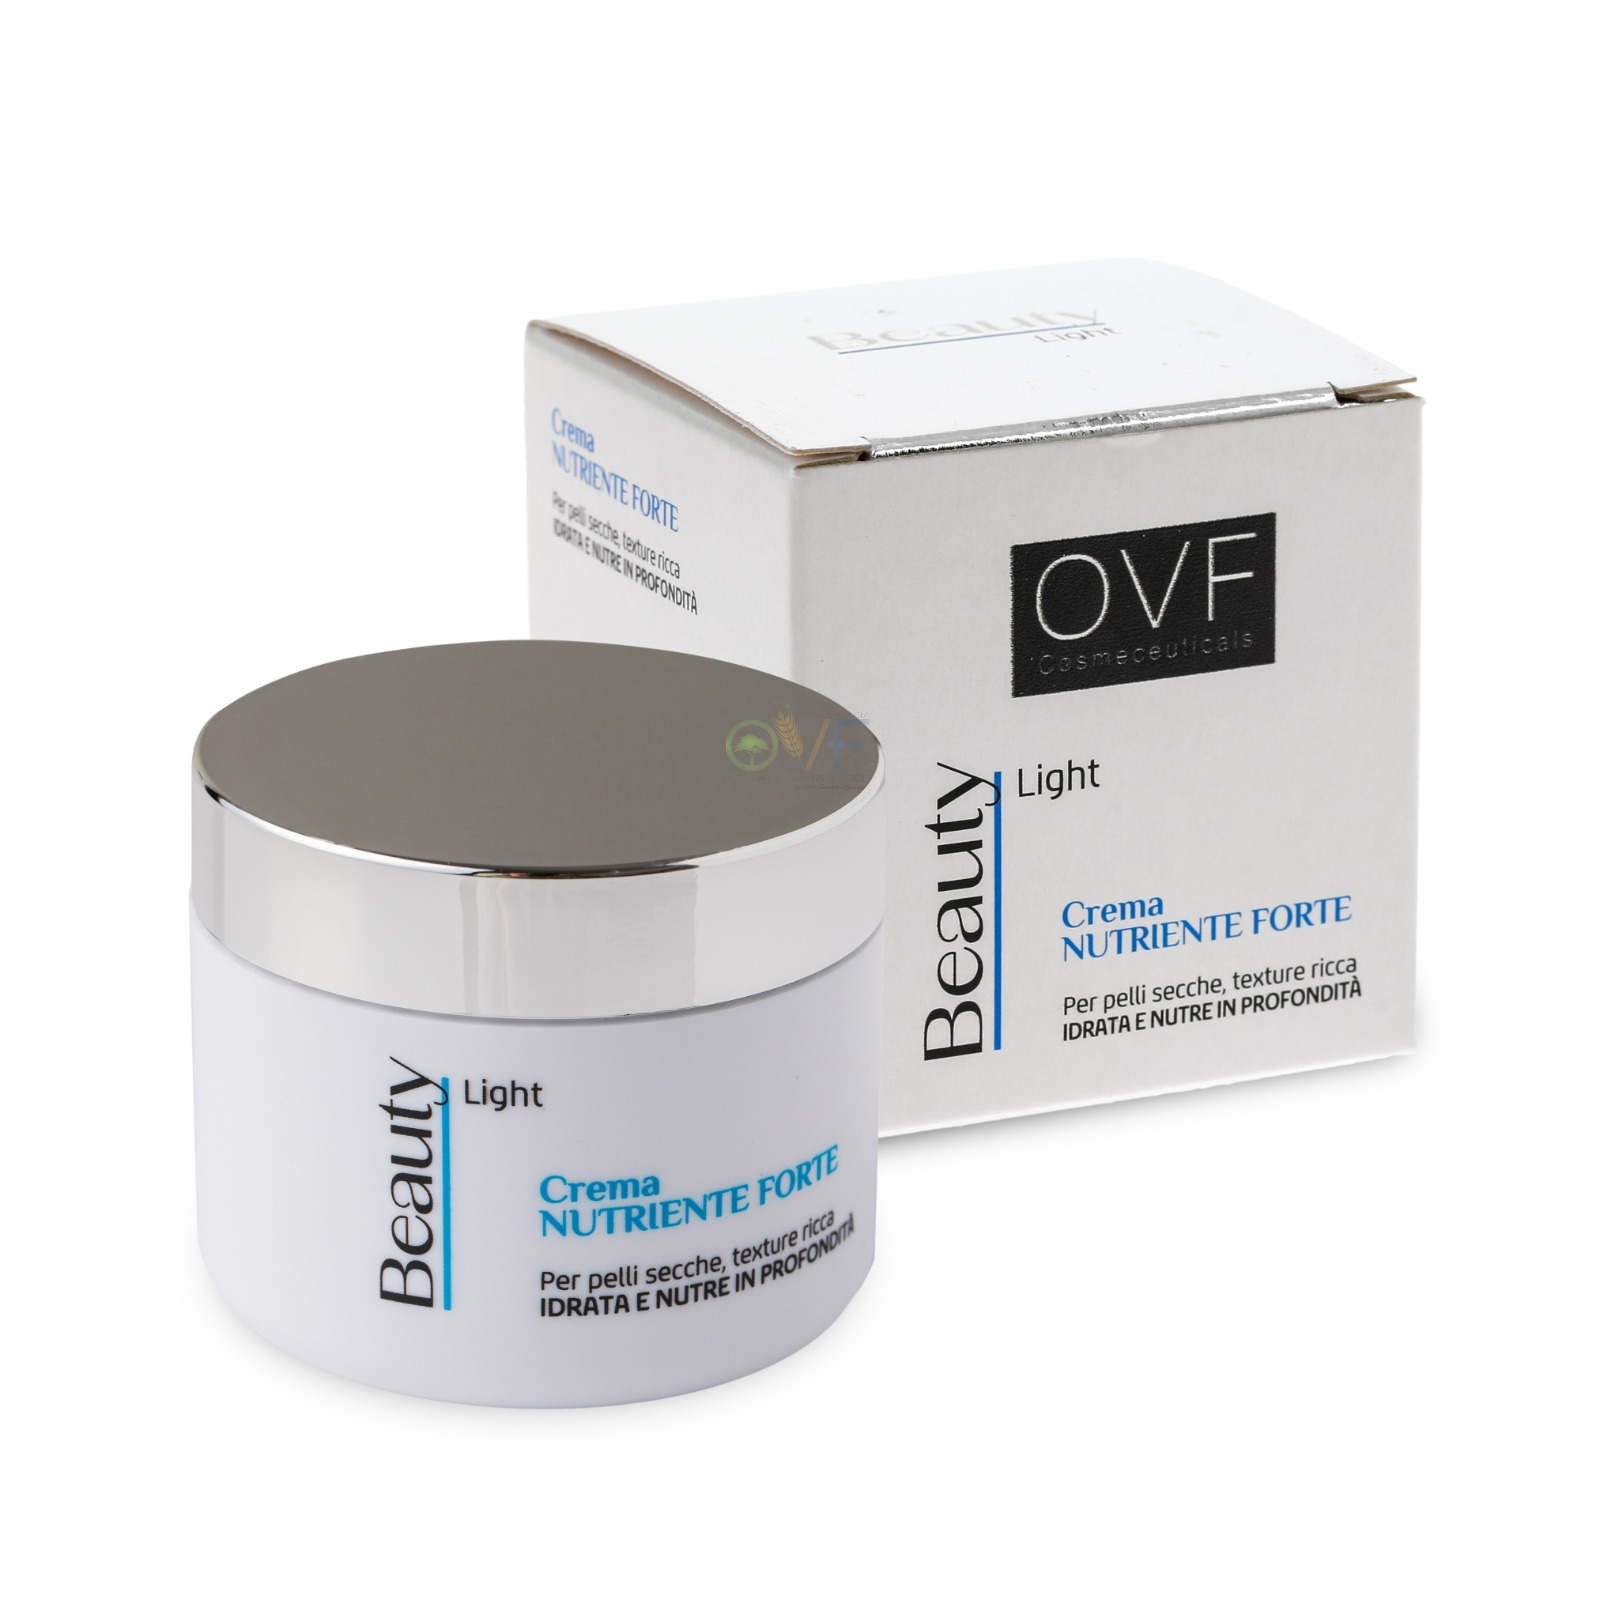 Ovf Cosmeceuticals Crema Nutriente Forte